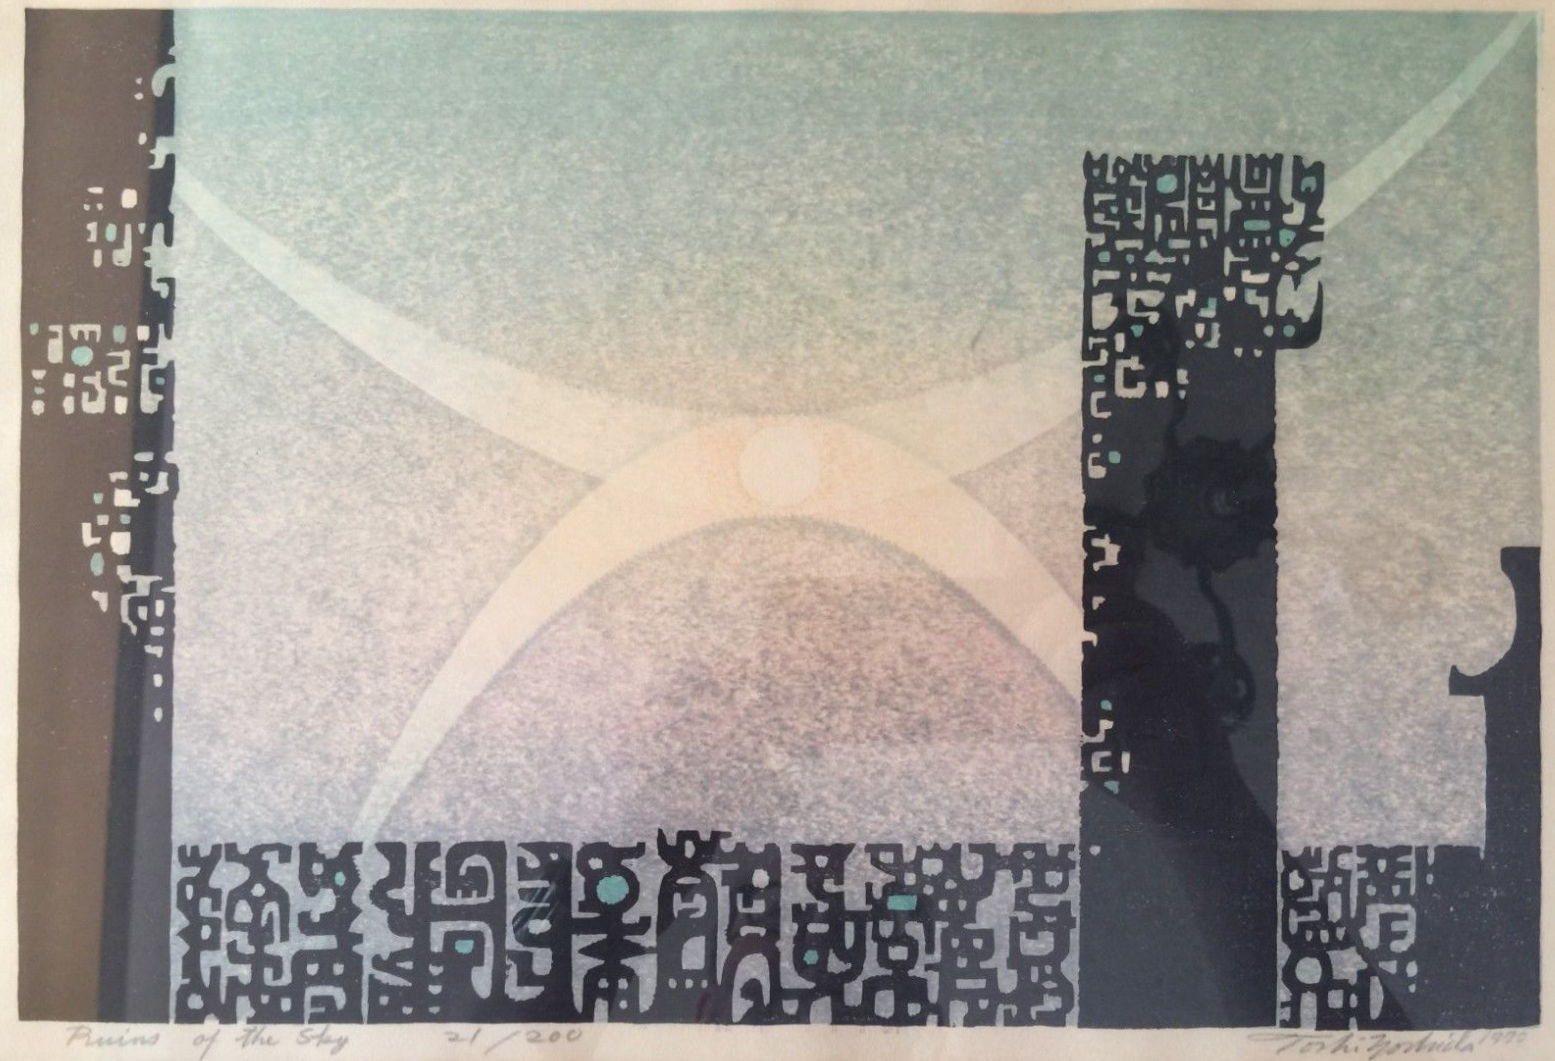 Toshi Yoshida “Ruins of the Sky” 1970 woodblock print